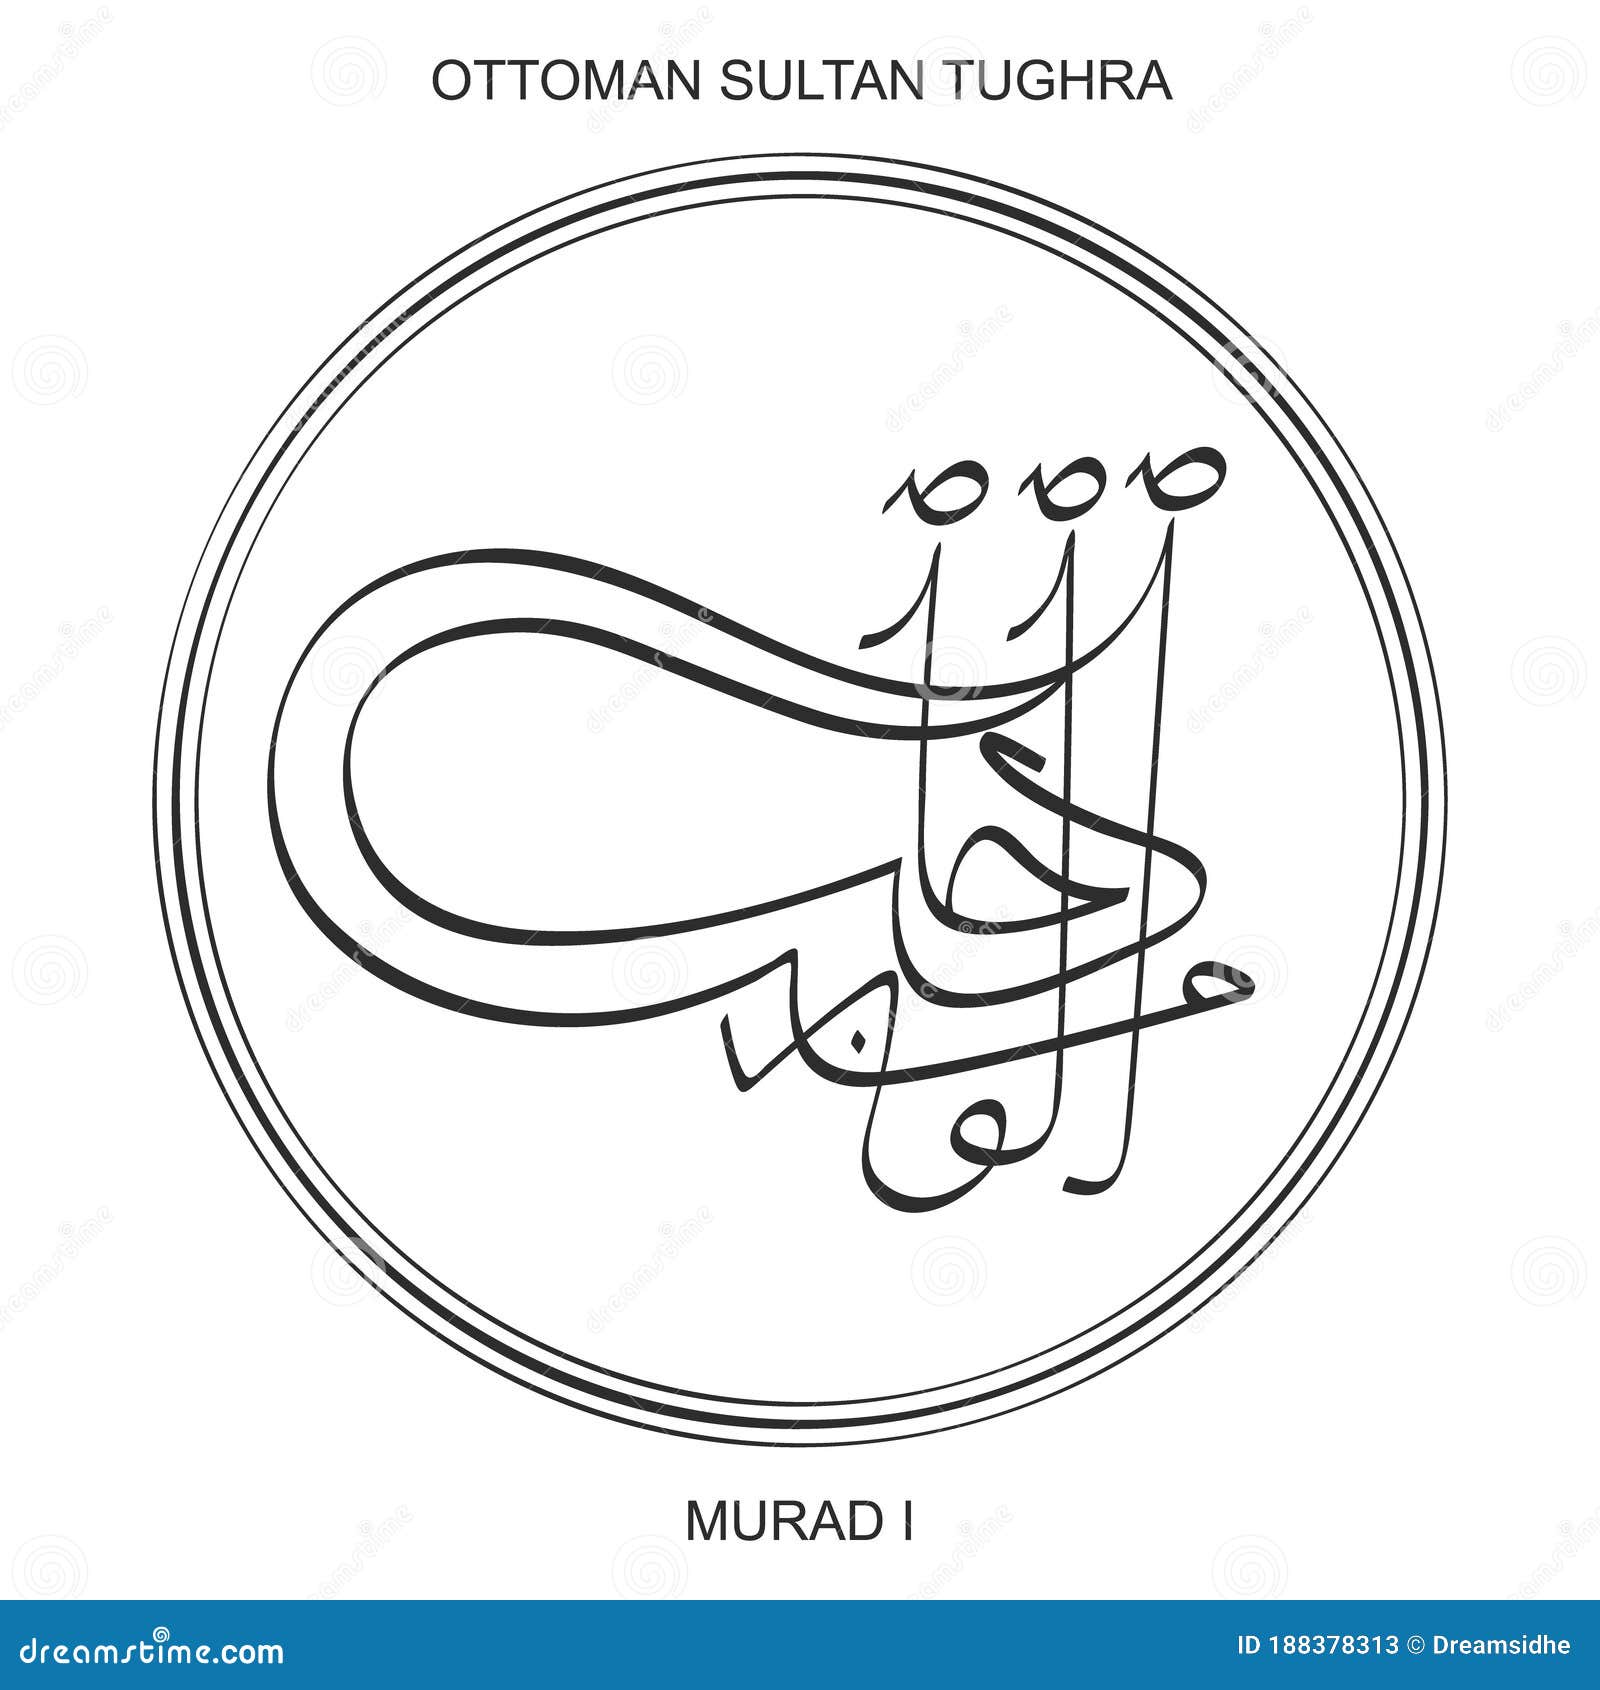 tughra a signature of ottoman sultan murad the first